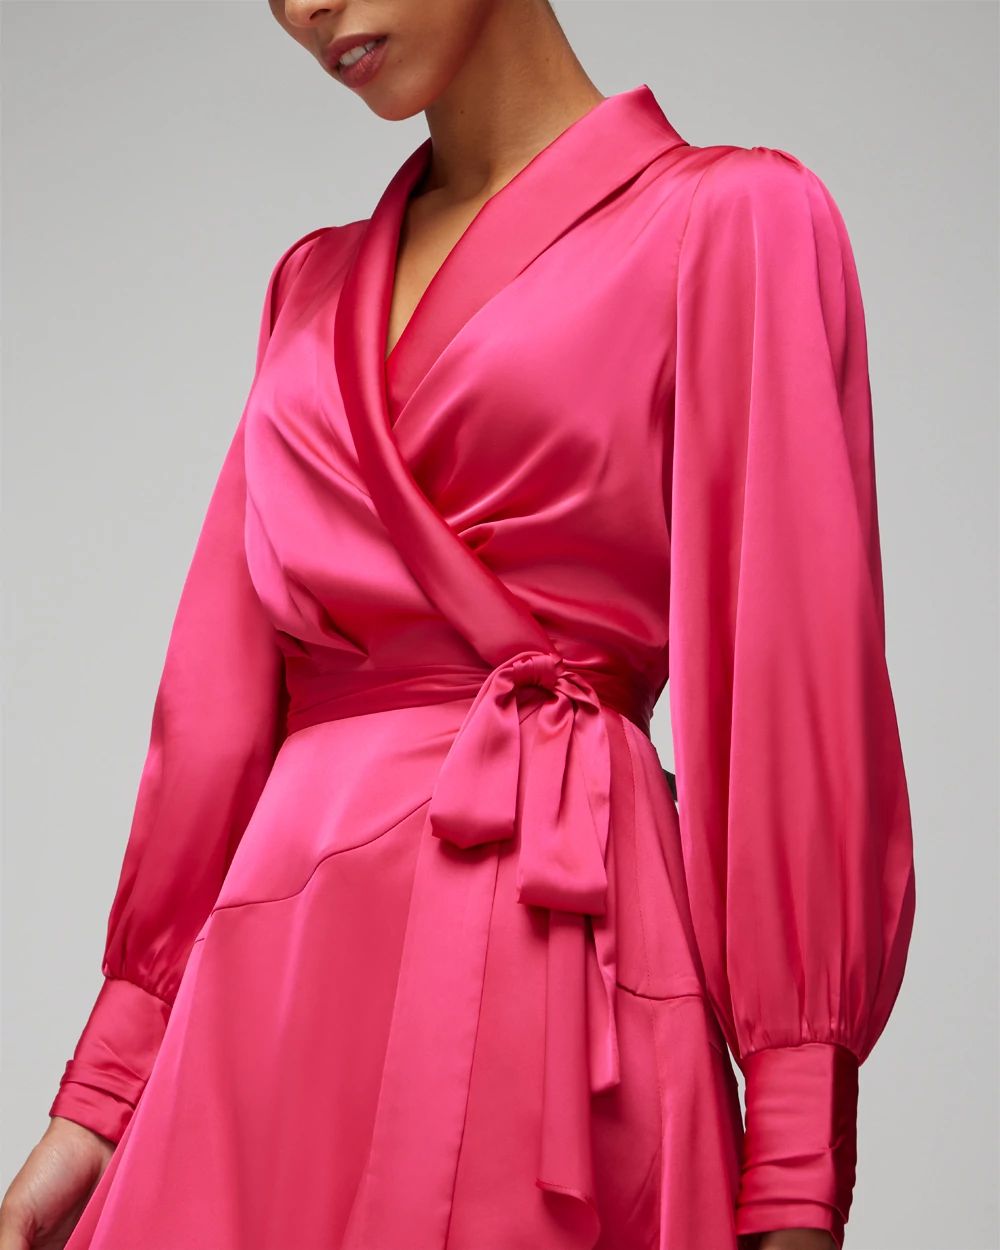 Long Sleeve Satin Wrap Mini Dress click to view larger image.